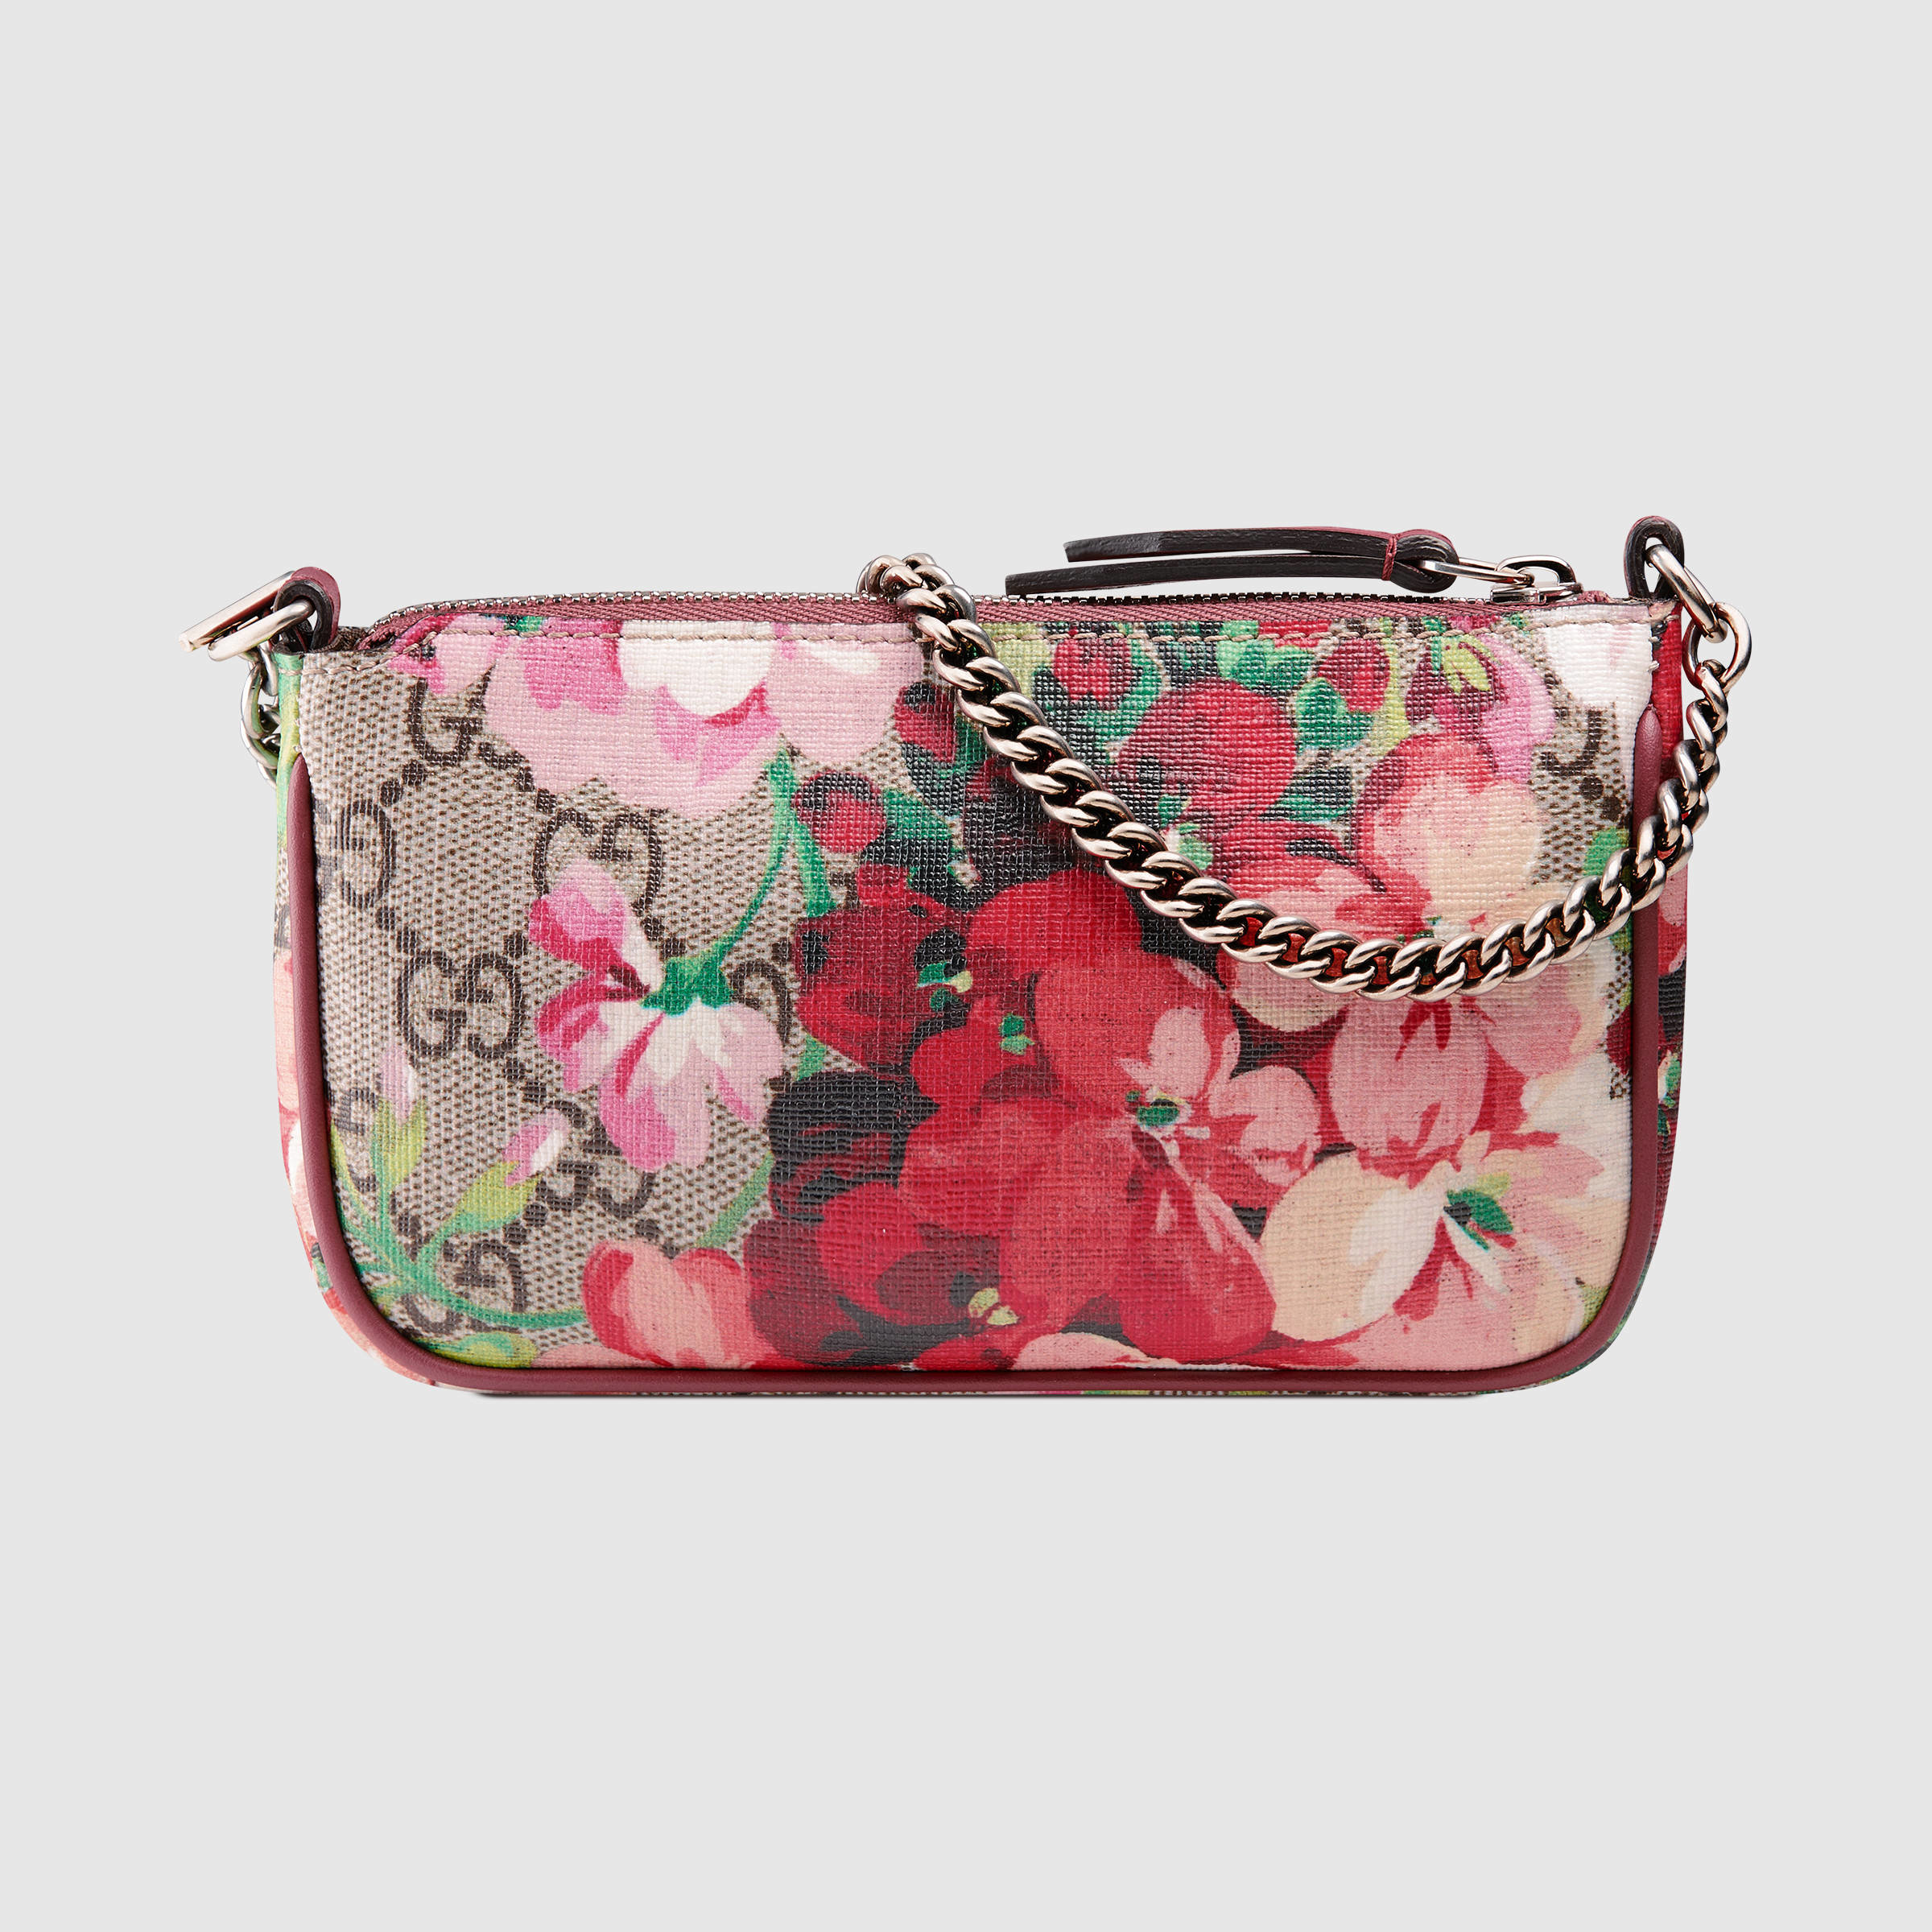 Lyst - Gucci Gg Blooms Mini Chain Bag